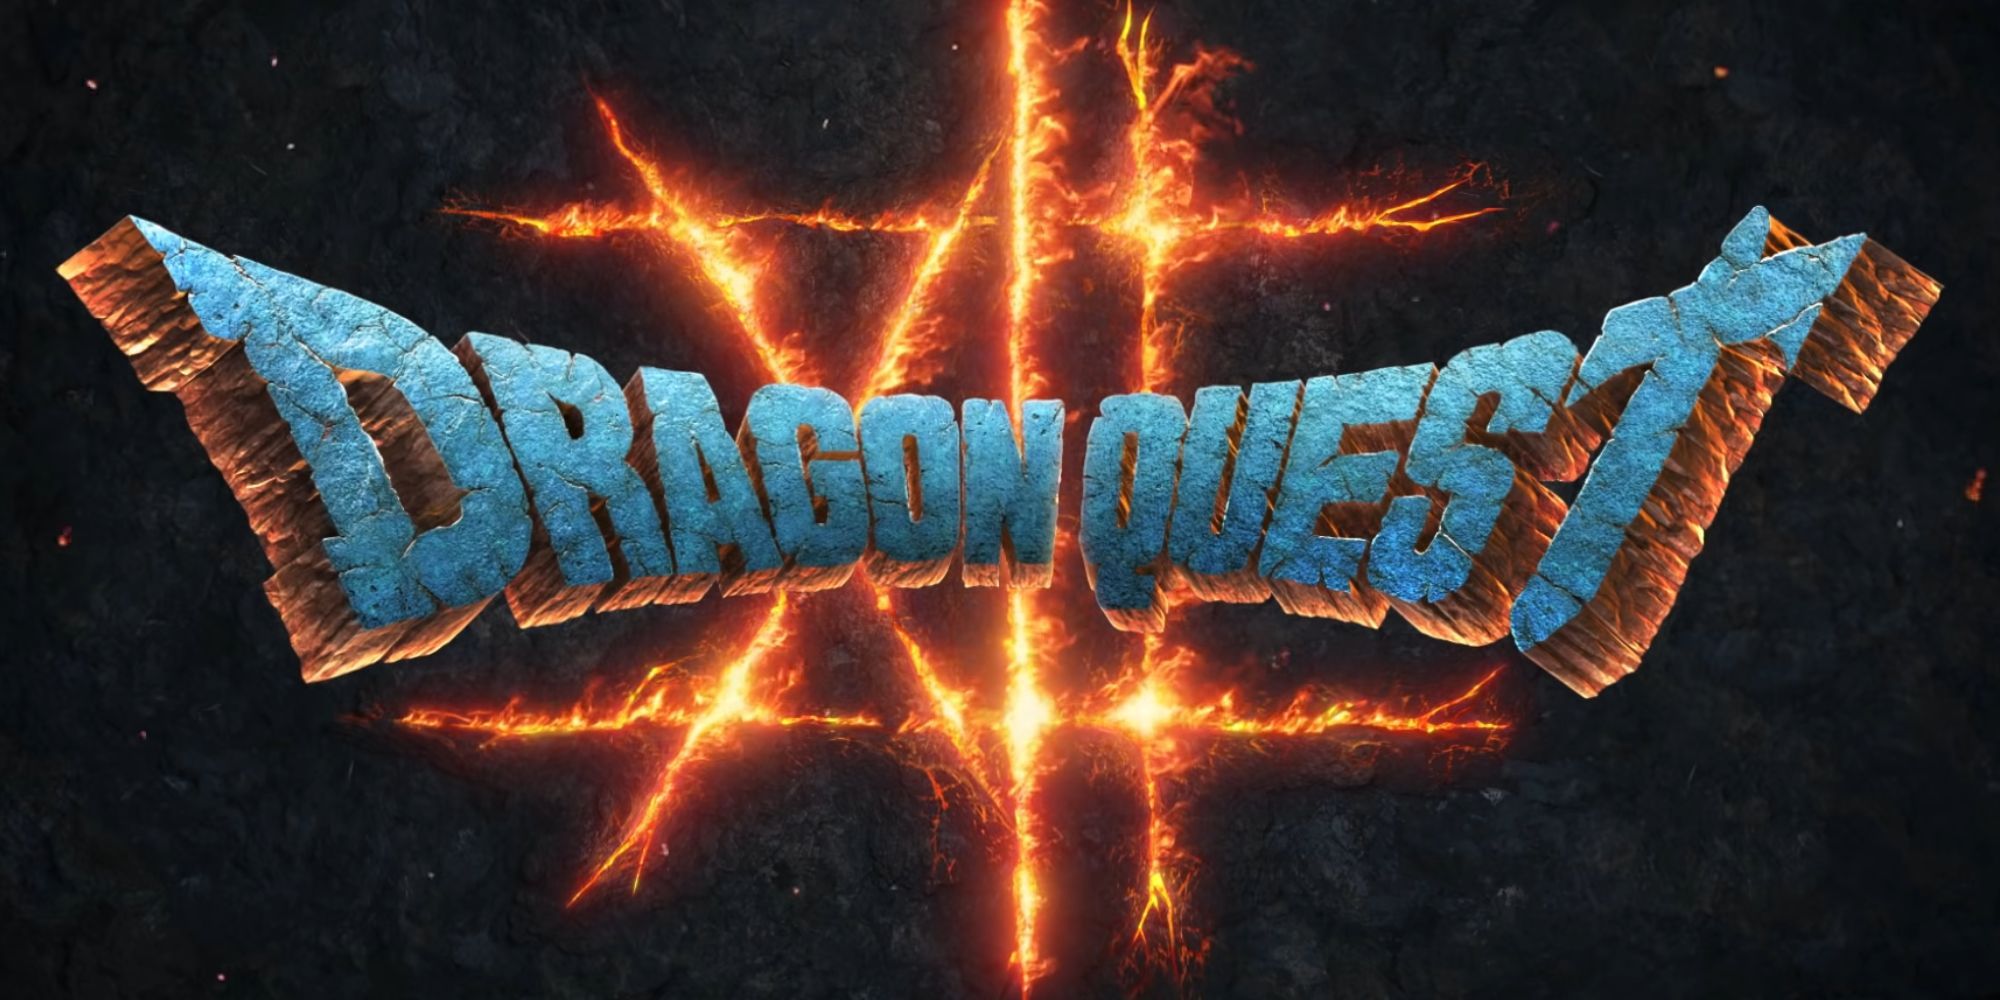 Dragon Quest 12's logo.